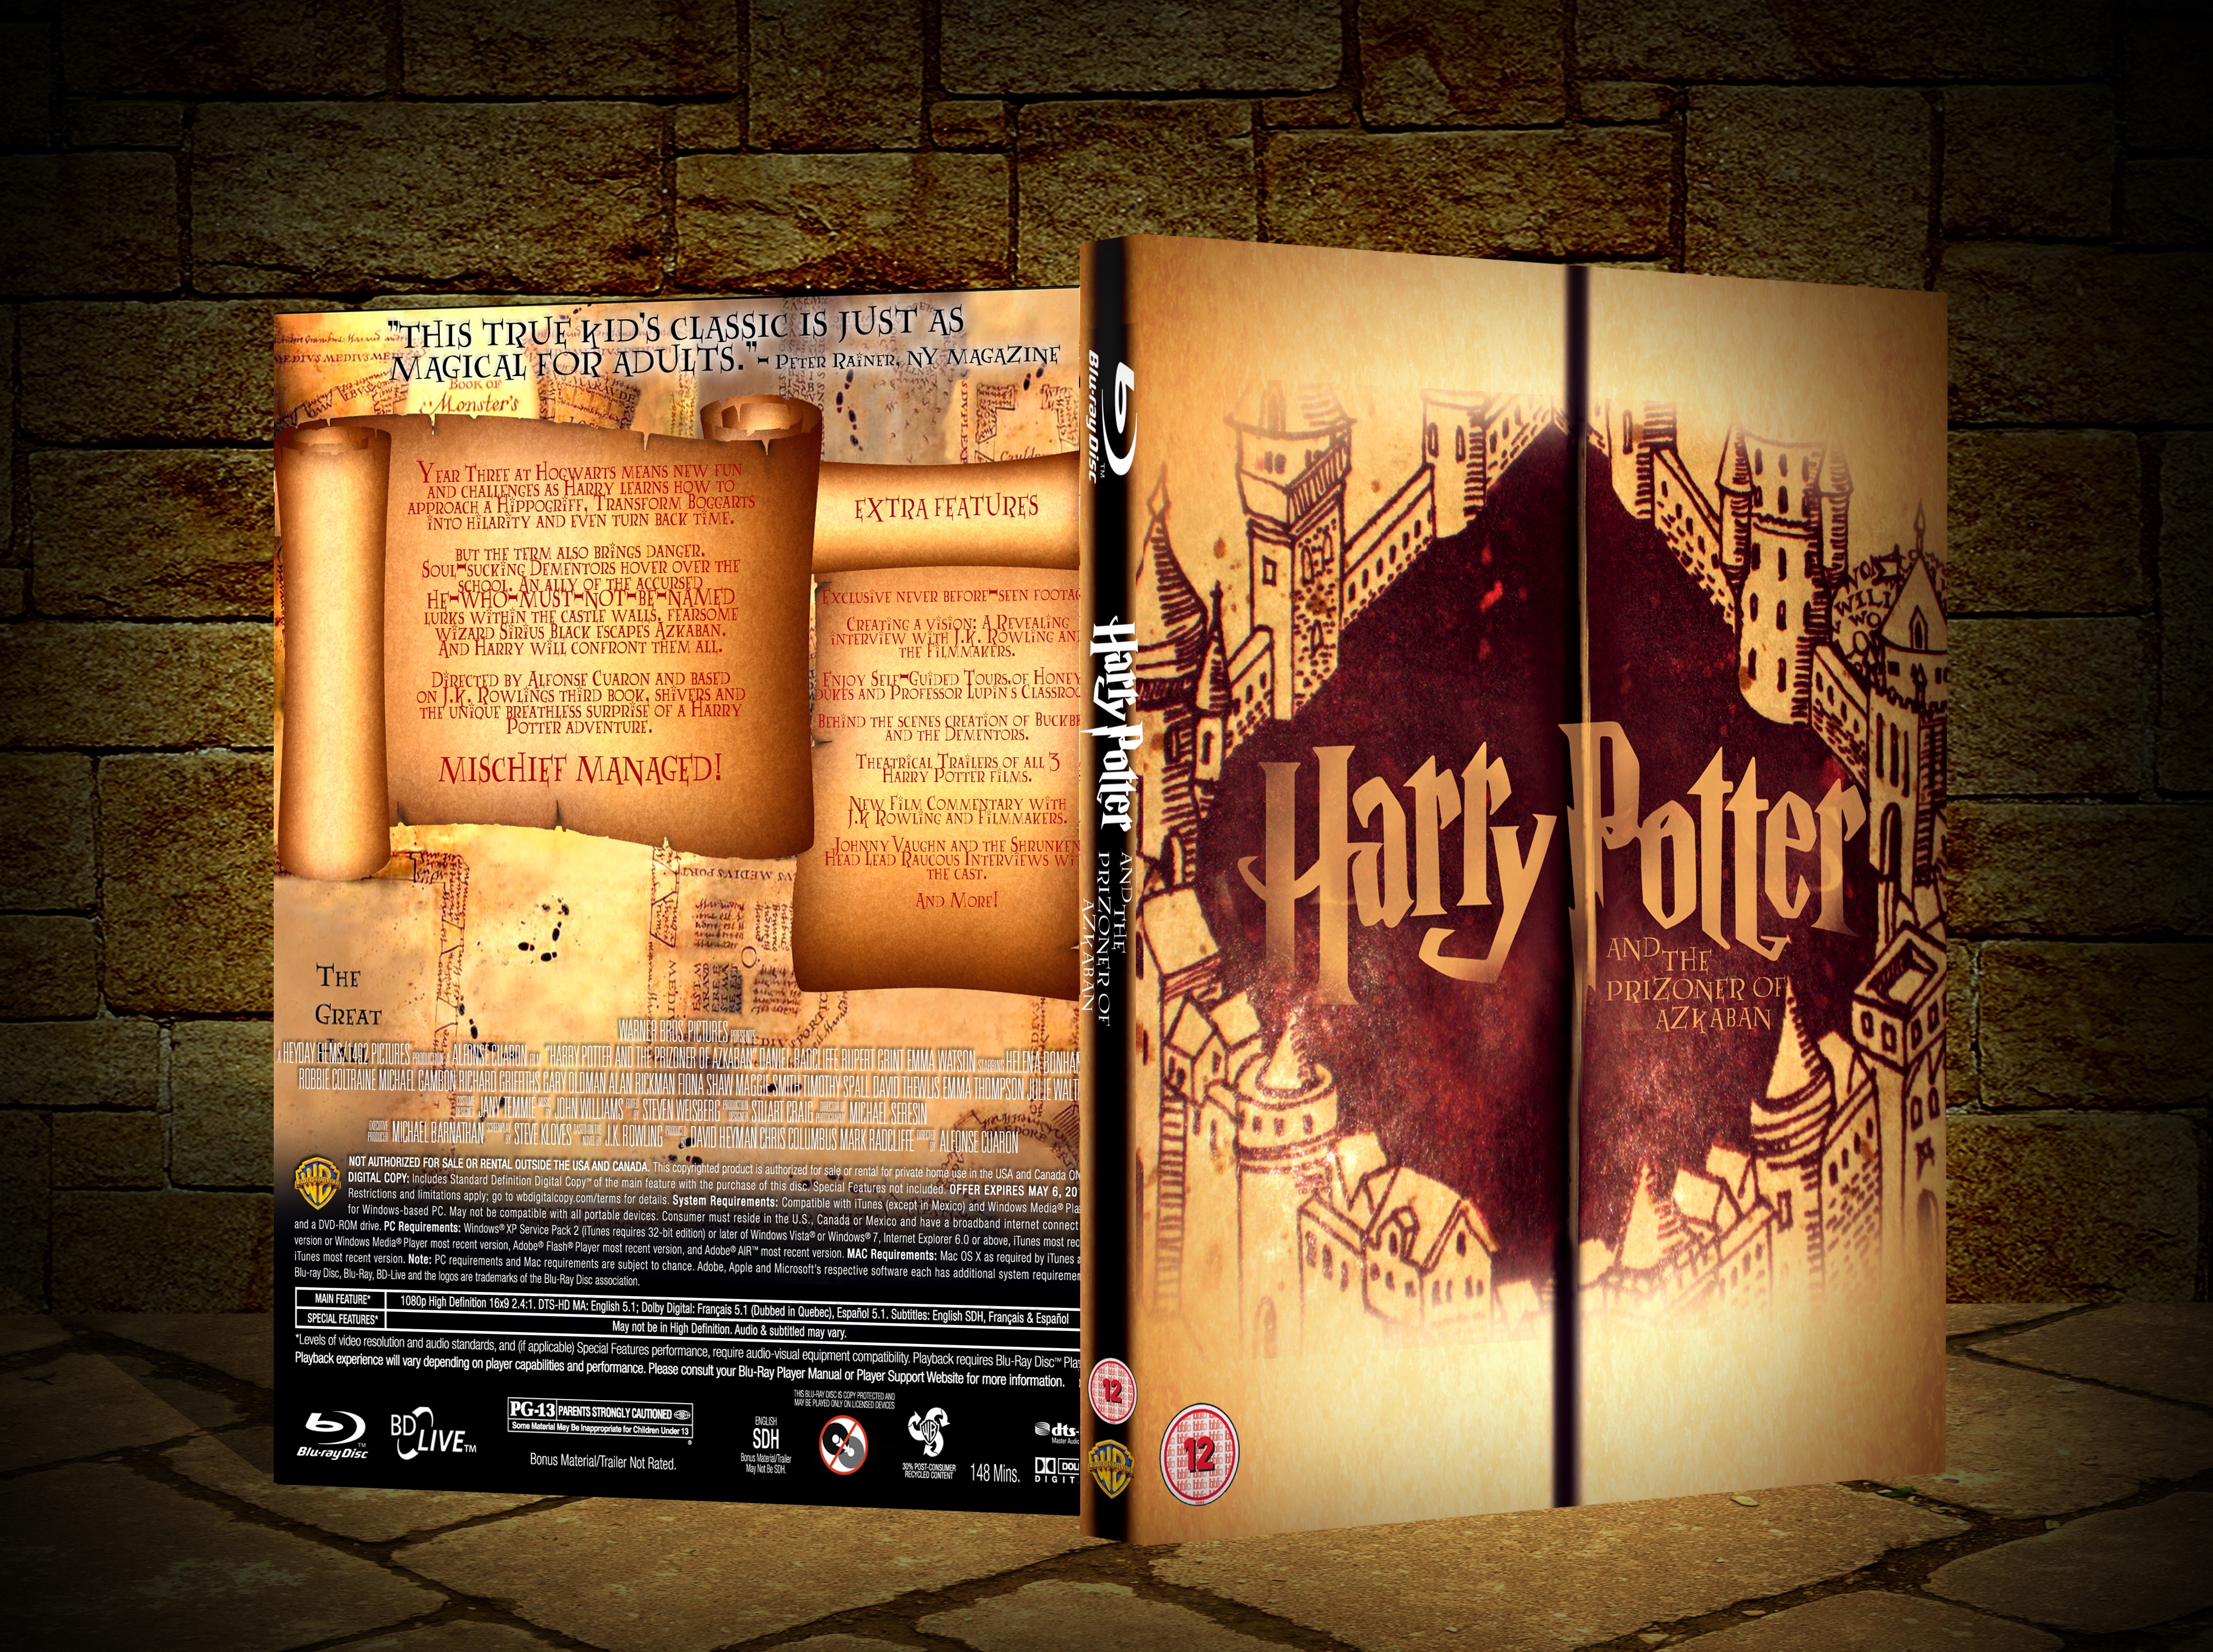 Harry Potter and the Prizoner of Azkaban box cover